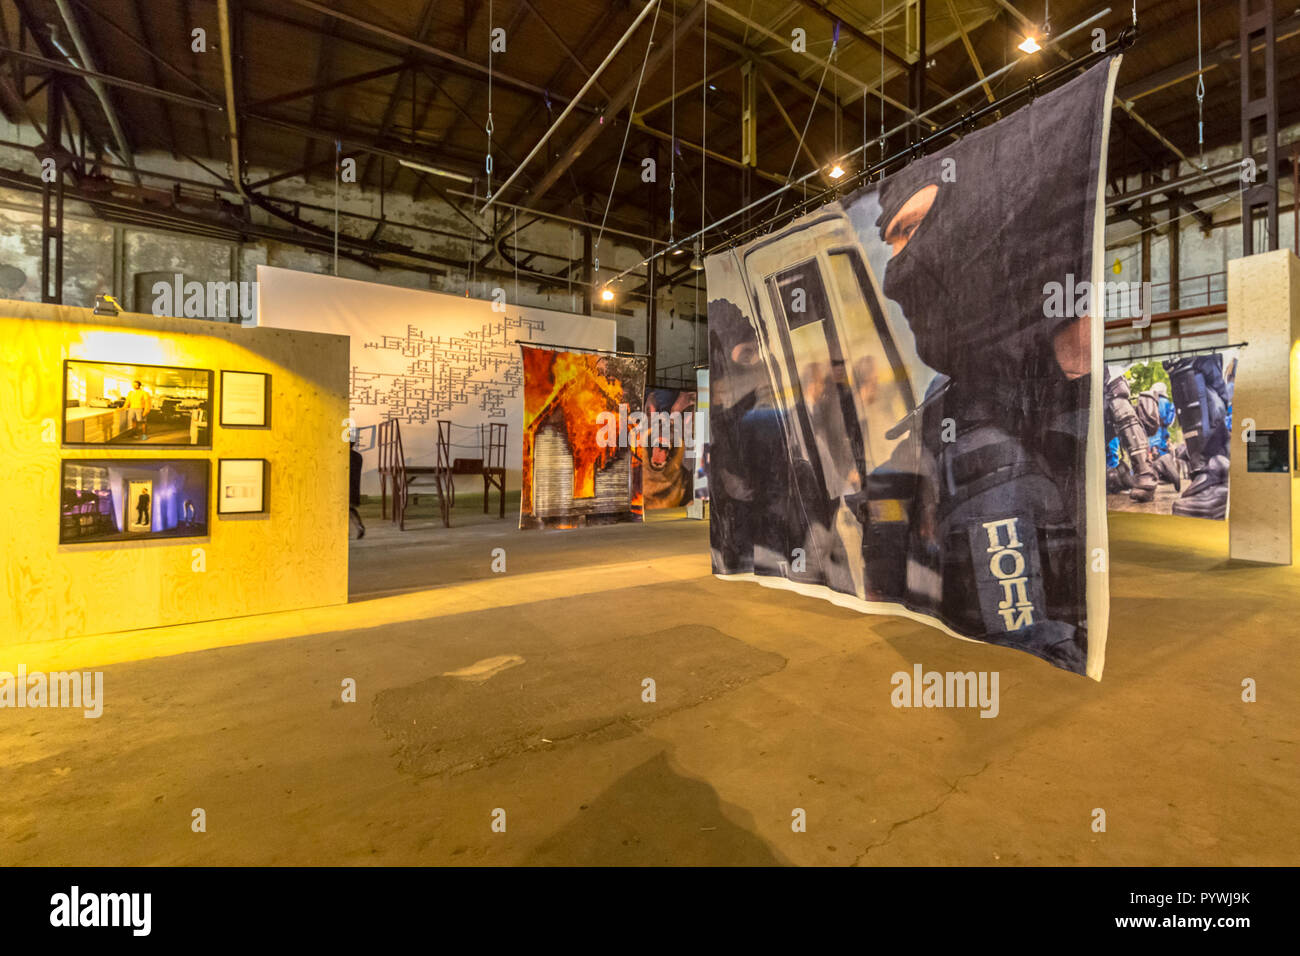 GRONINGEN, THE NETHERLANDS - SEP 27, 2015: Images at Photo exhibition Noorderlicht Data Rush in oude suikerfabriek Groningen. Stock Photo